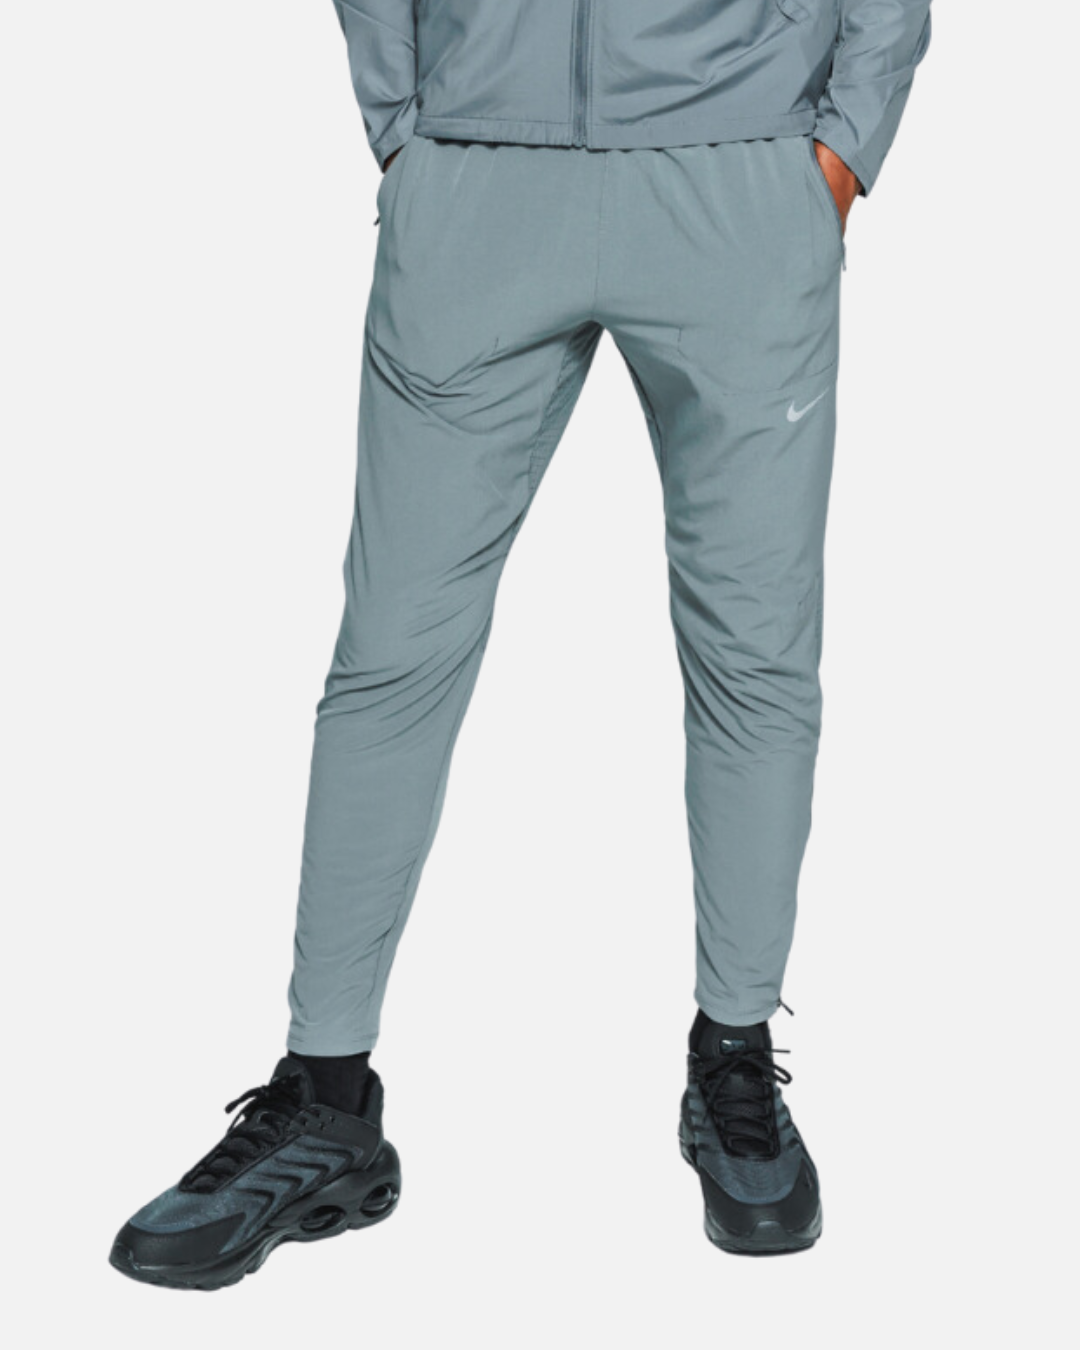 Pantalon Nike Phenom - Grau